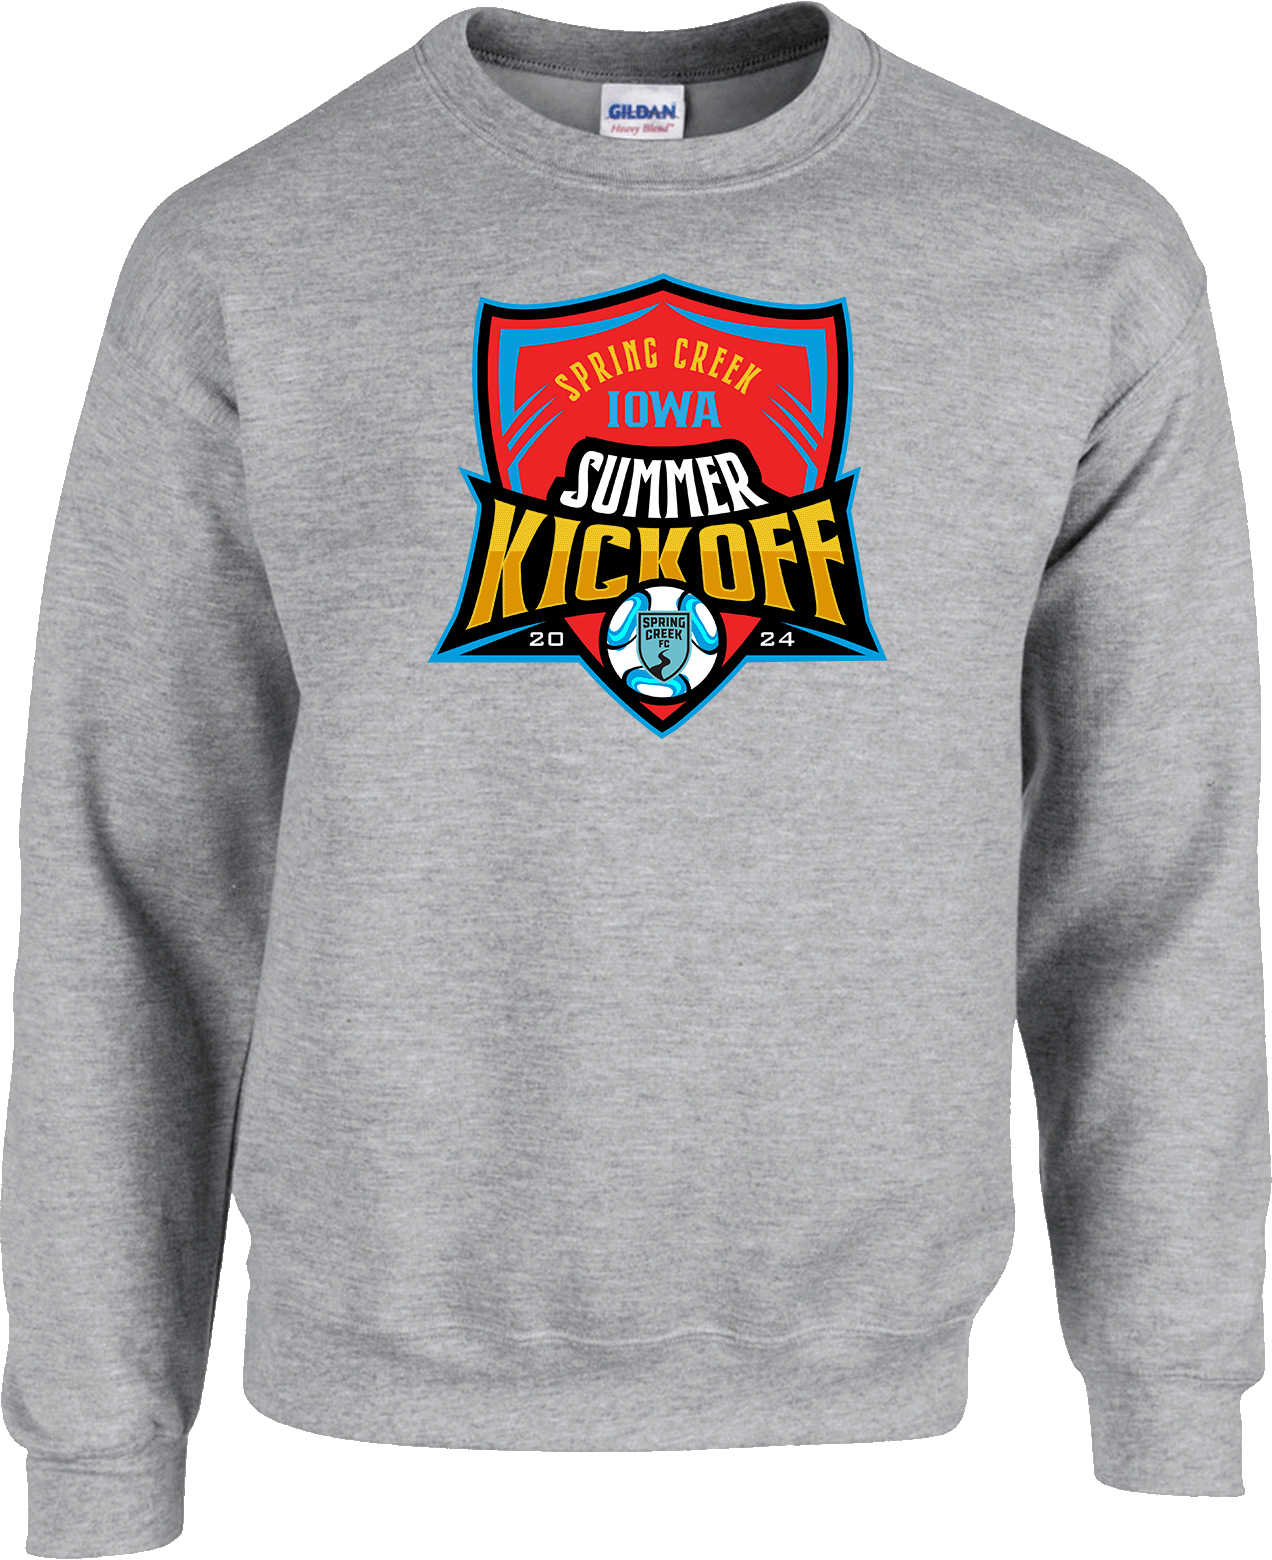 Crew Sweatershirt - 2024 Spring Creek Iowa Summer Kickoff